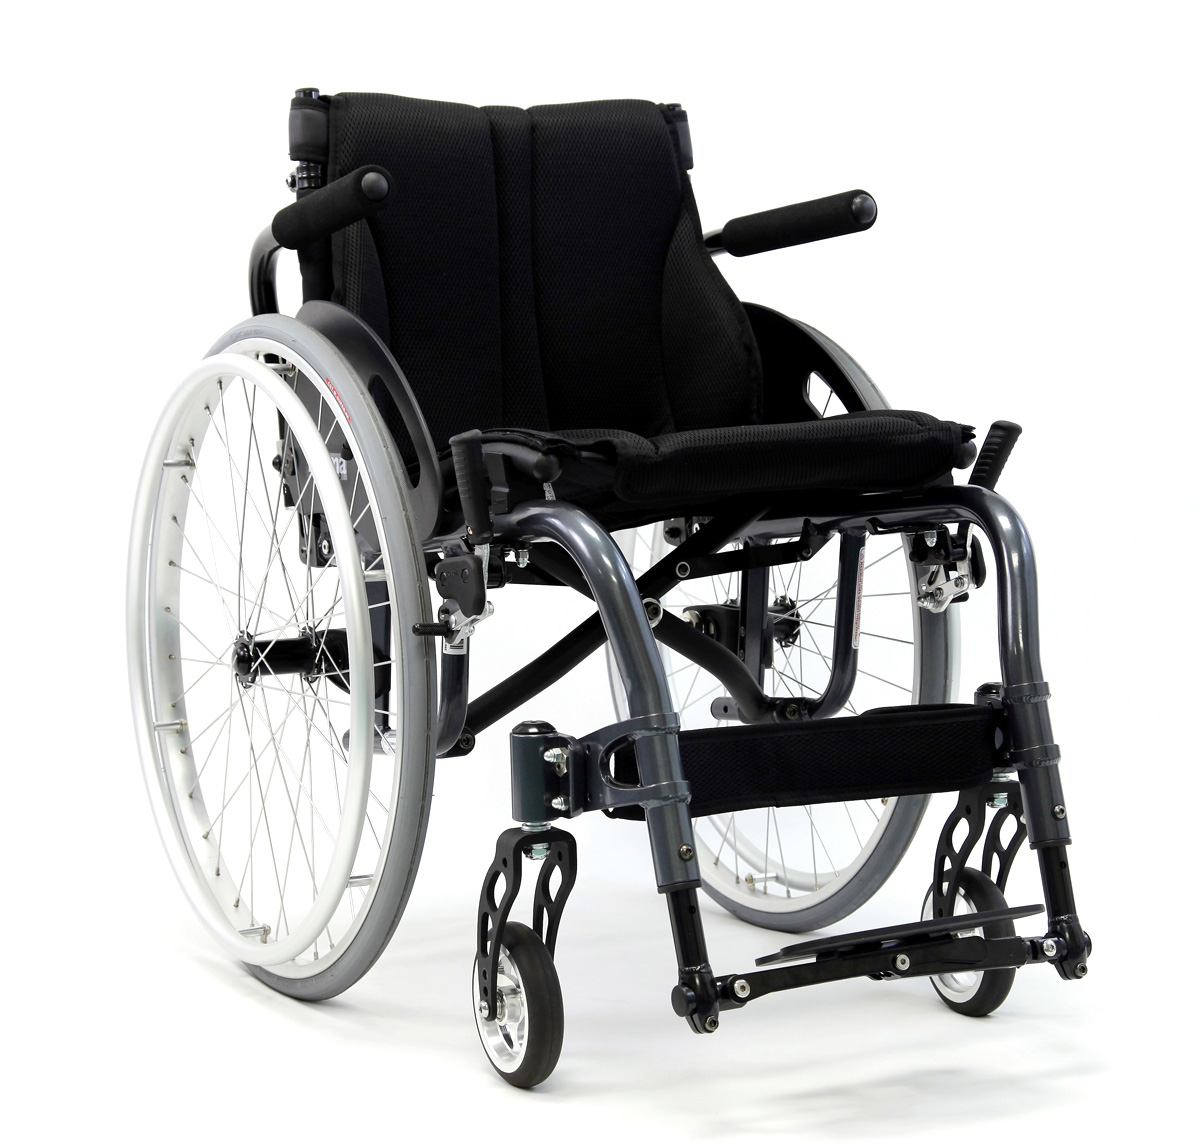 Karman Karman-s-atx S-ergo Atx Active Wheelchair